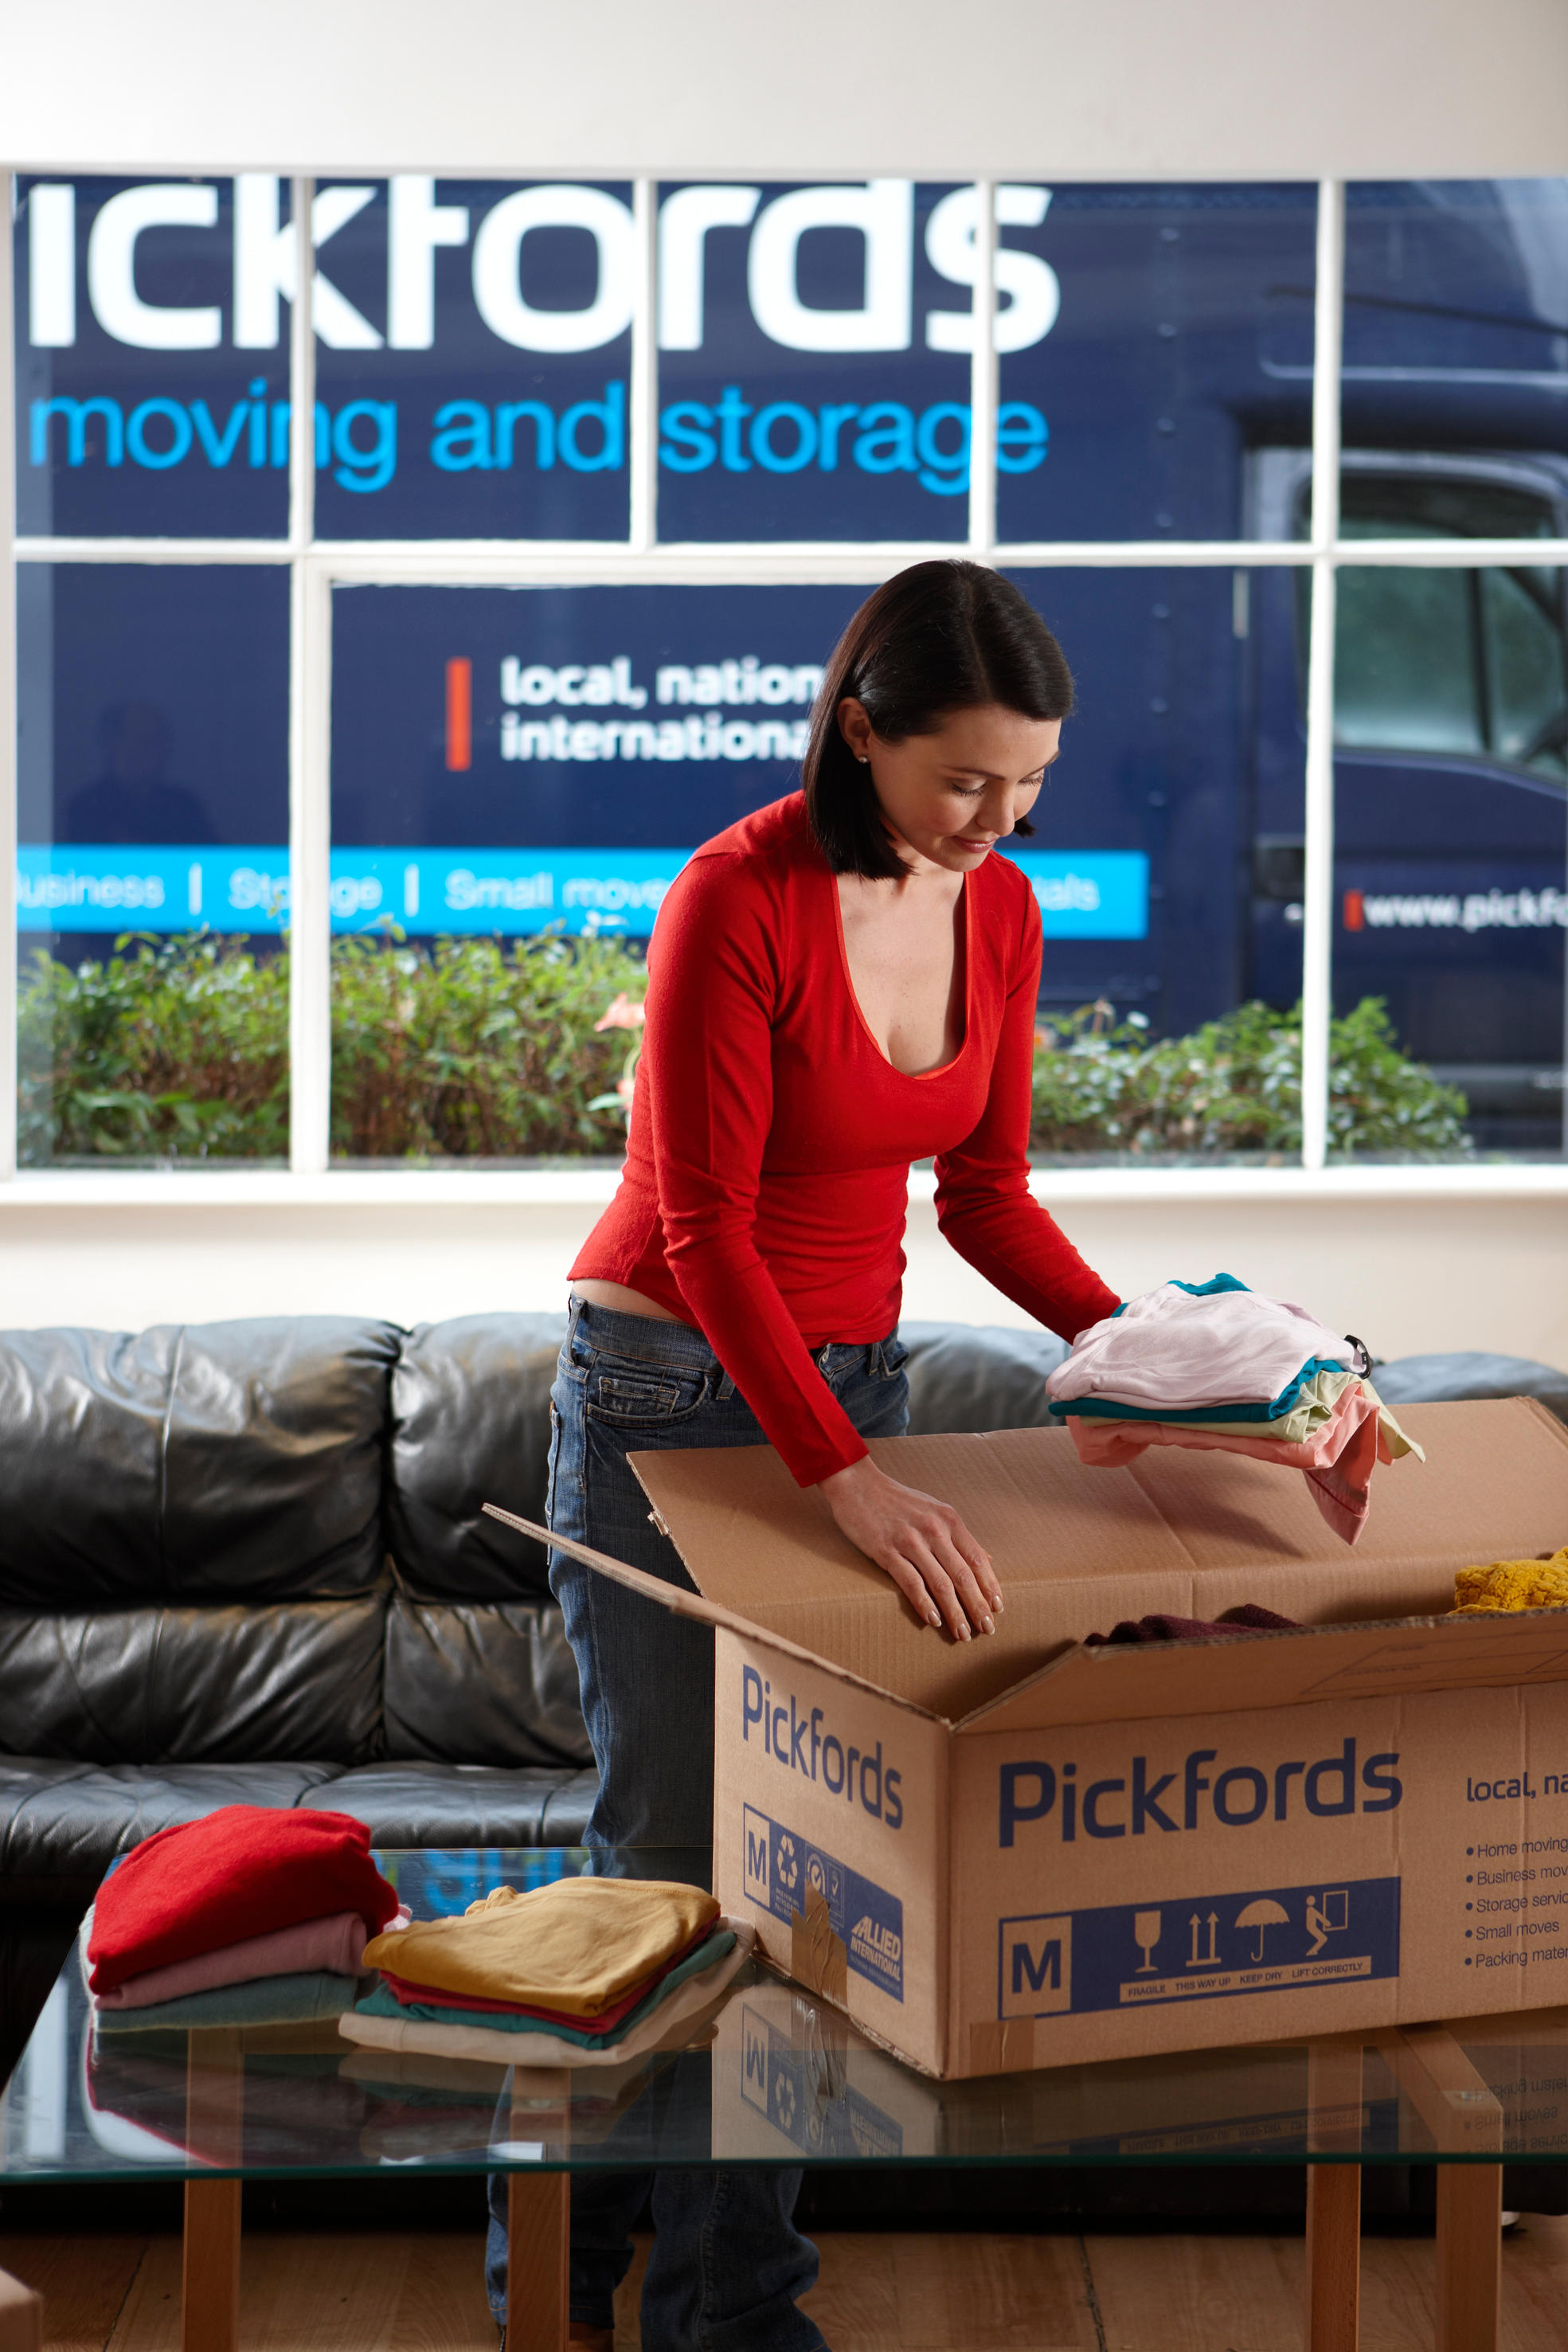 Customer packing using a Pickfords box Pickfords Moving & Storage Edinburgh 08000 198556